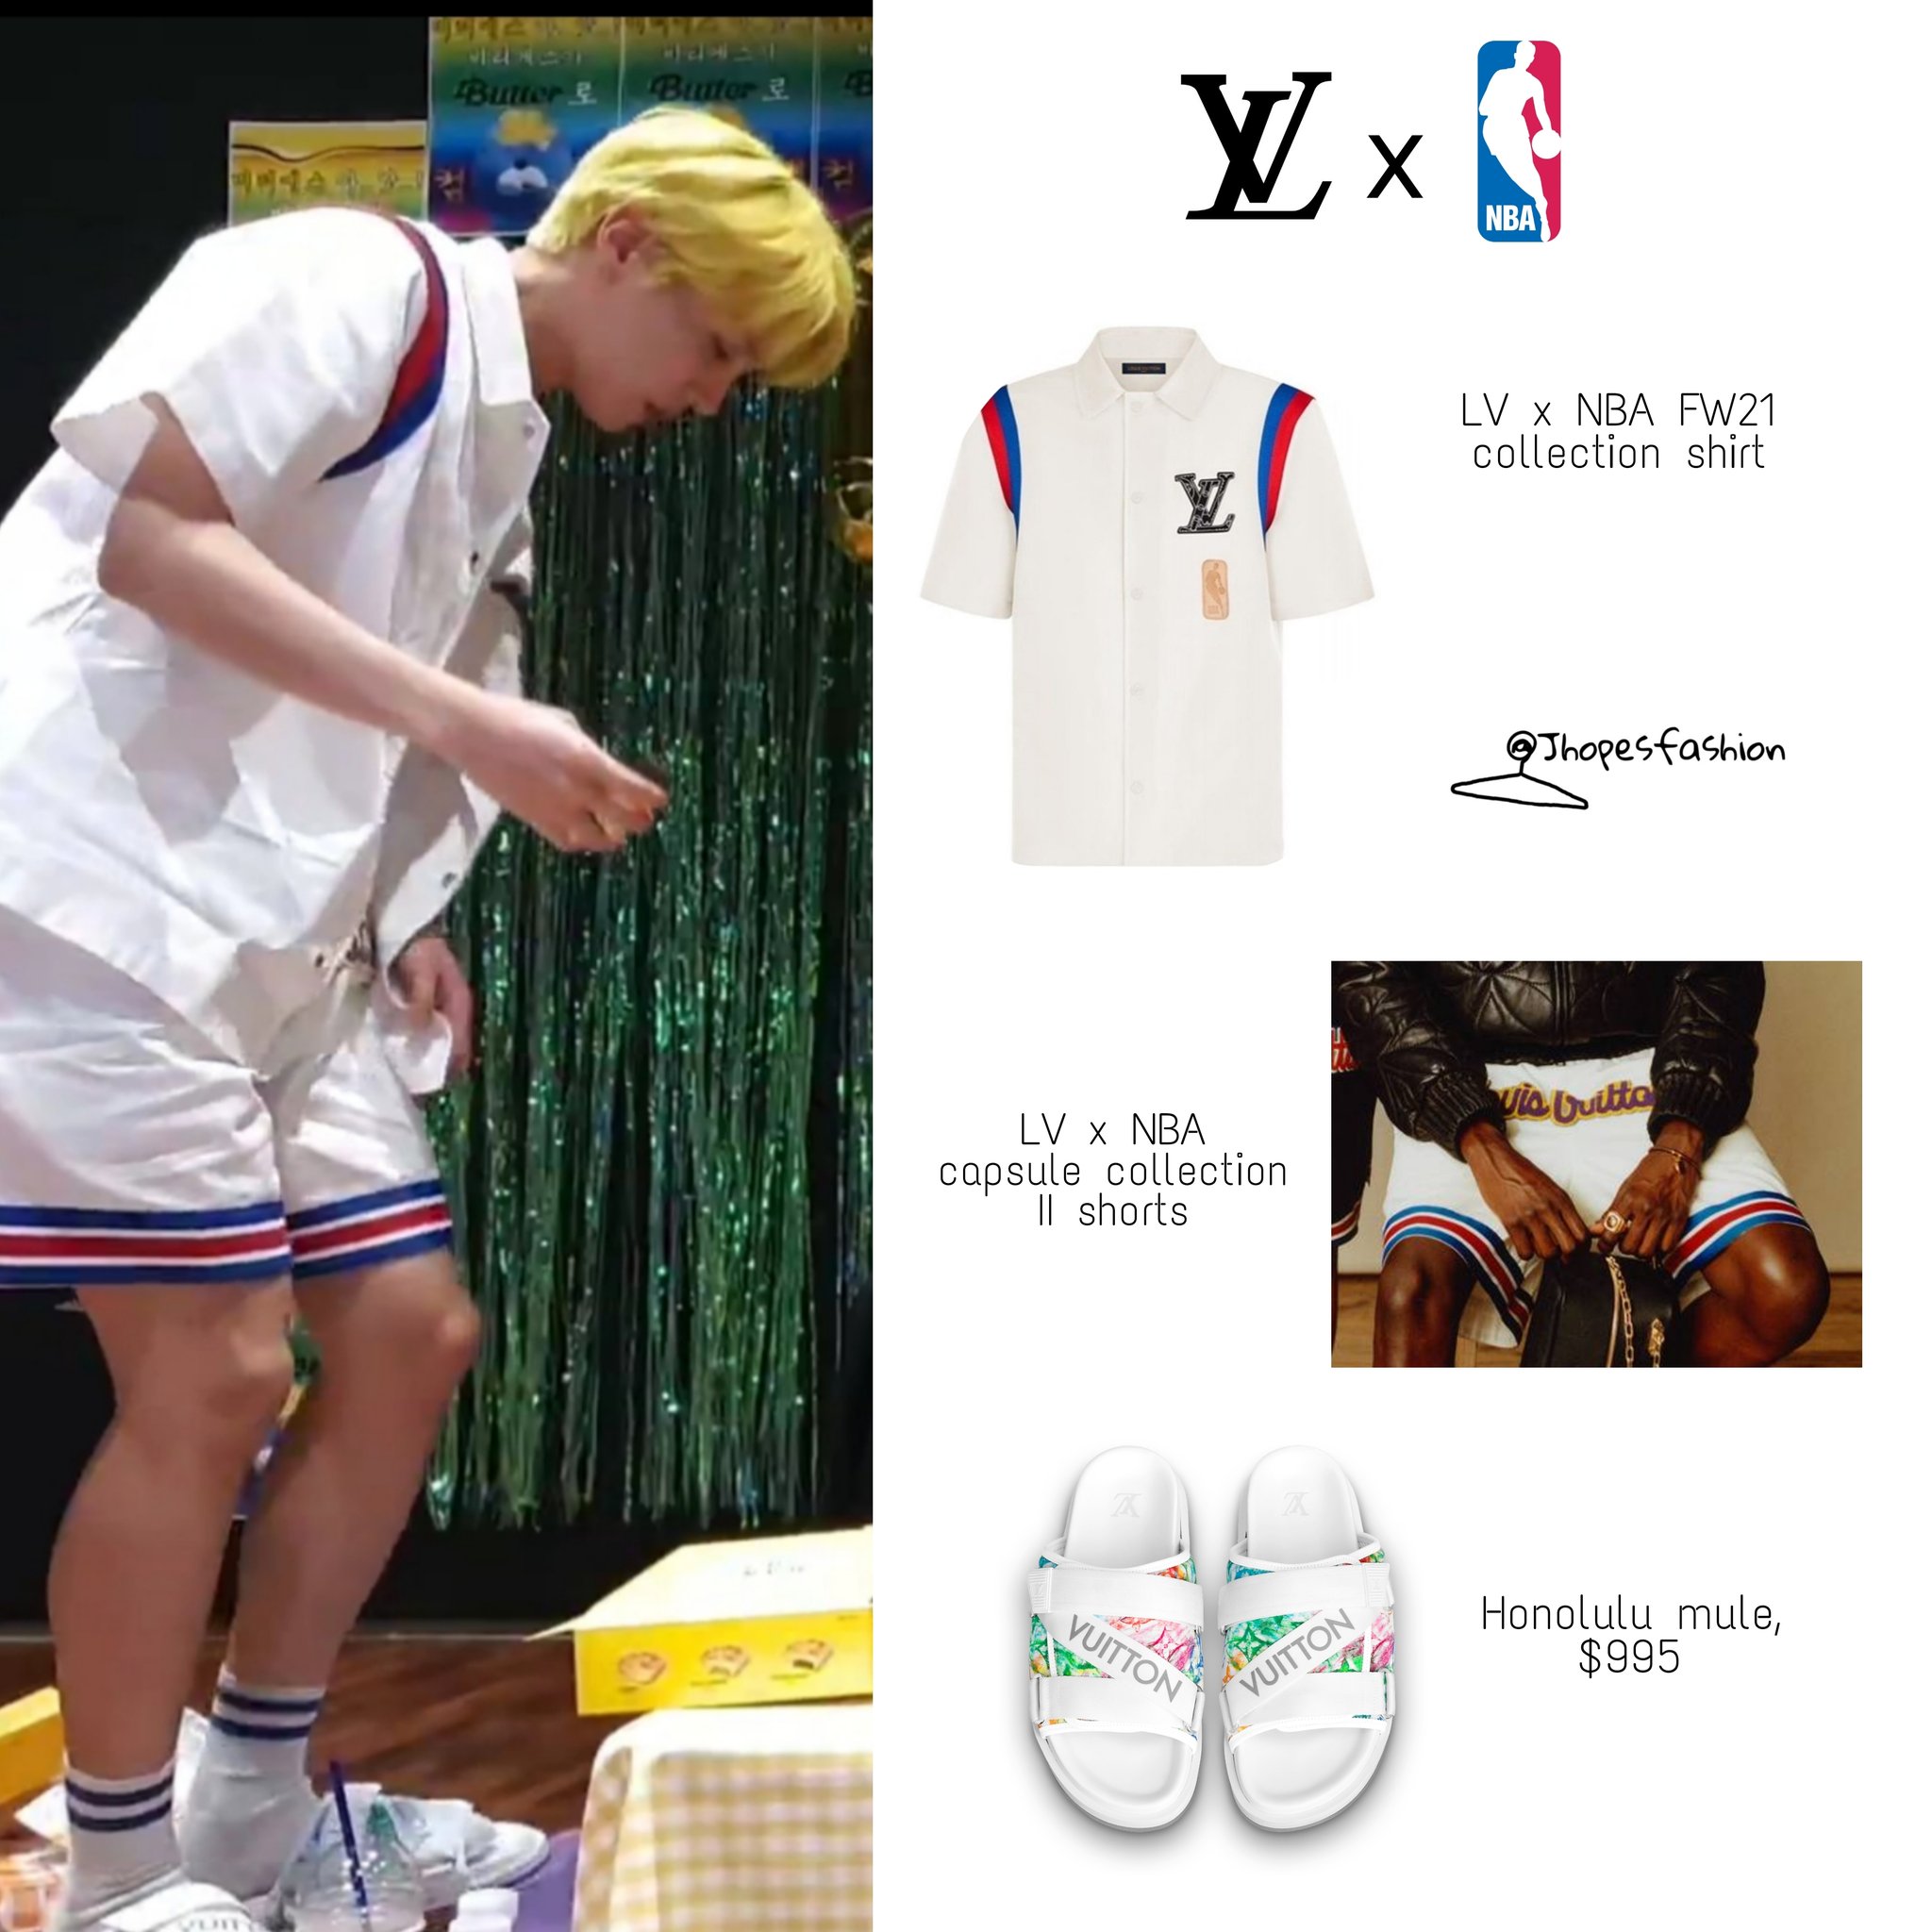 j-hope's closet (rest) on X: Hoseok's LV x NBA shirt & shorts and Louis  Vuitton mule 210521 - Butter comeback vlive #Jhope #제이홉 #Jhopefashion #BTS   / X